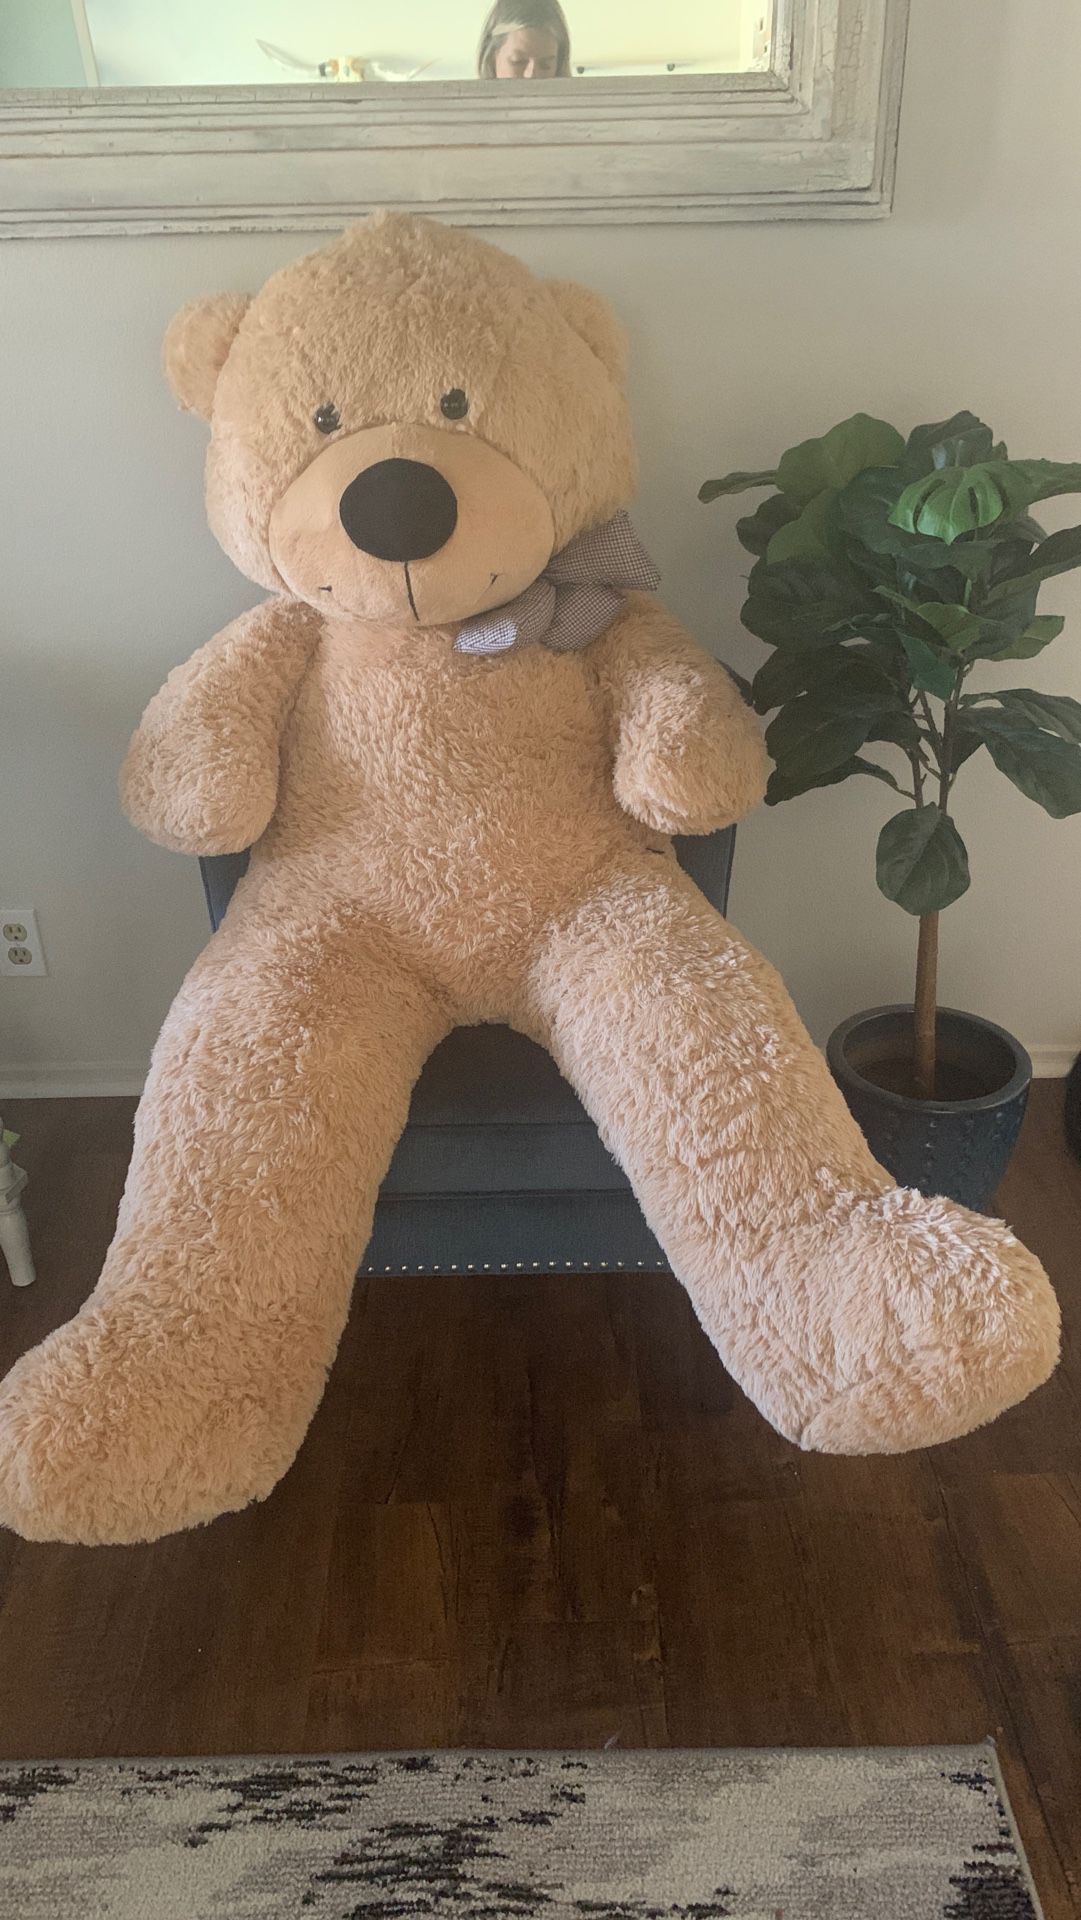 Bear stuffed animal